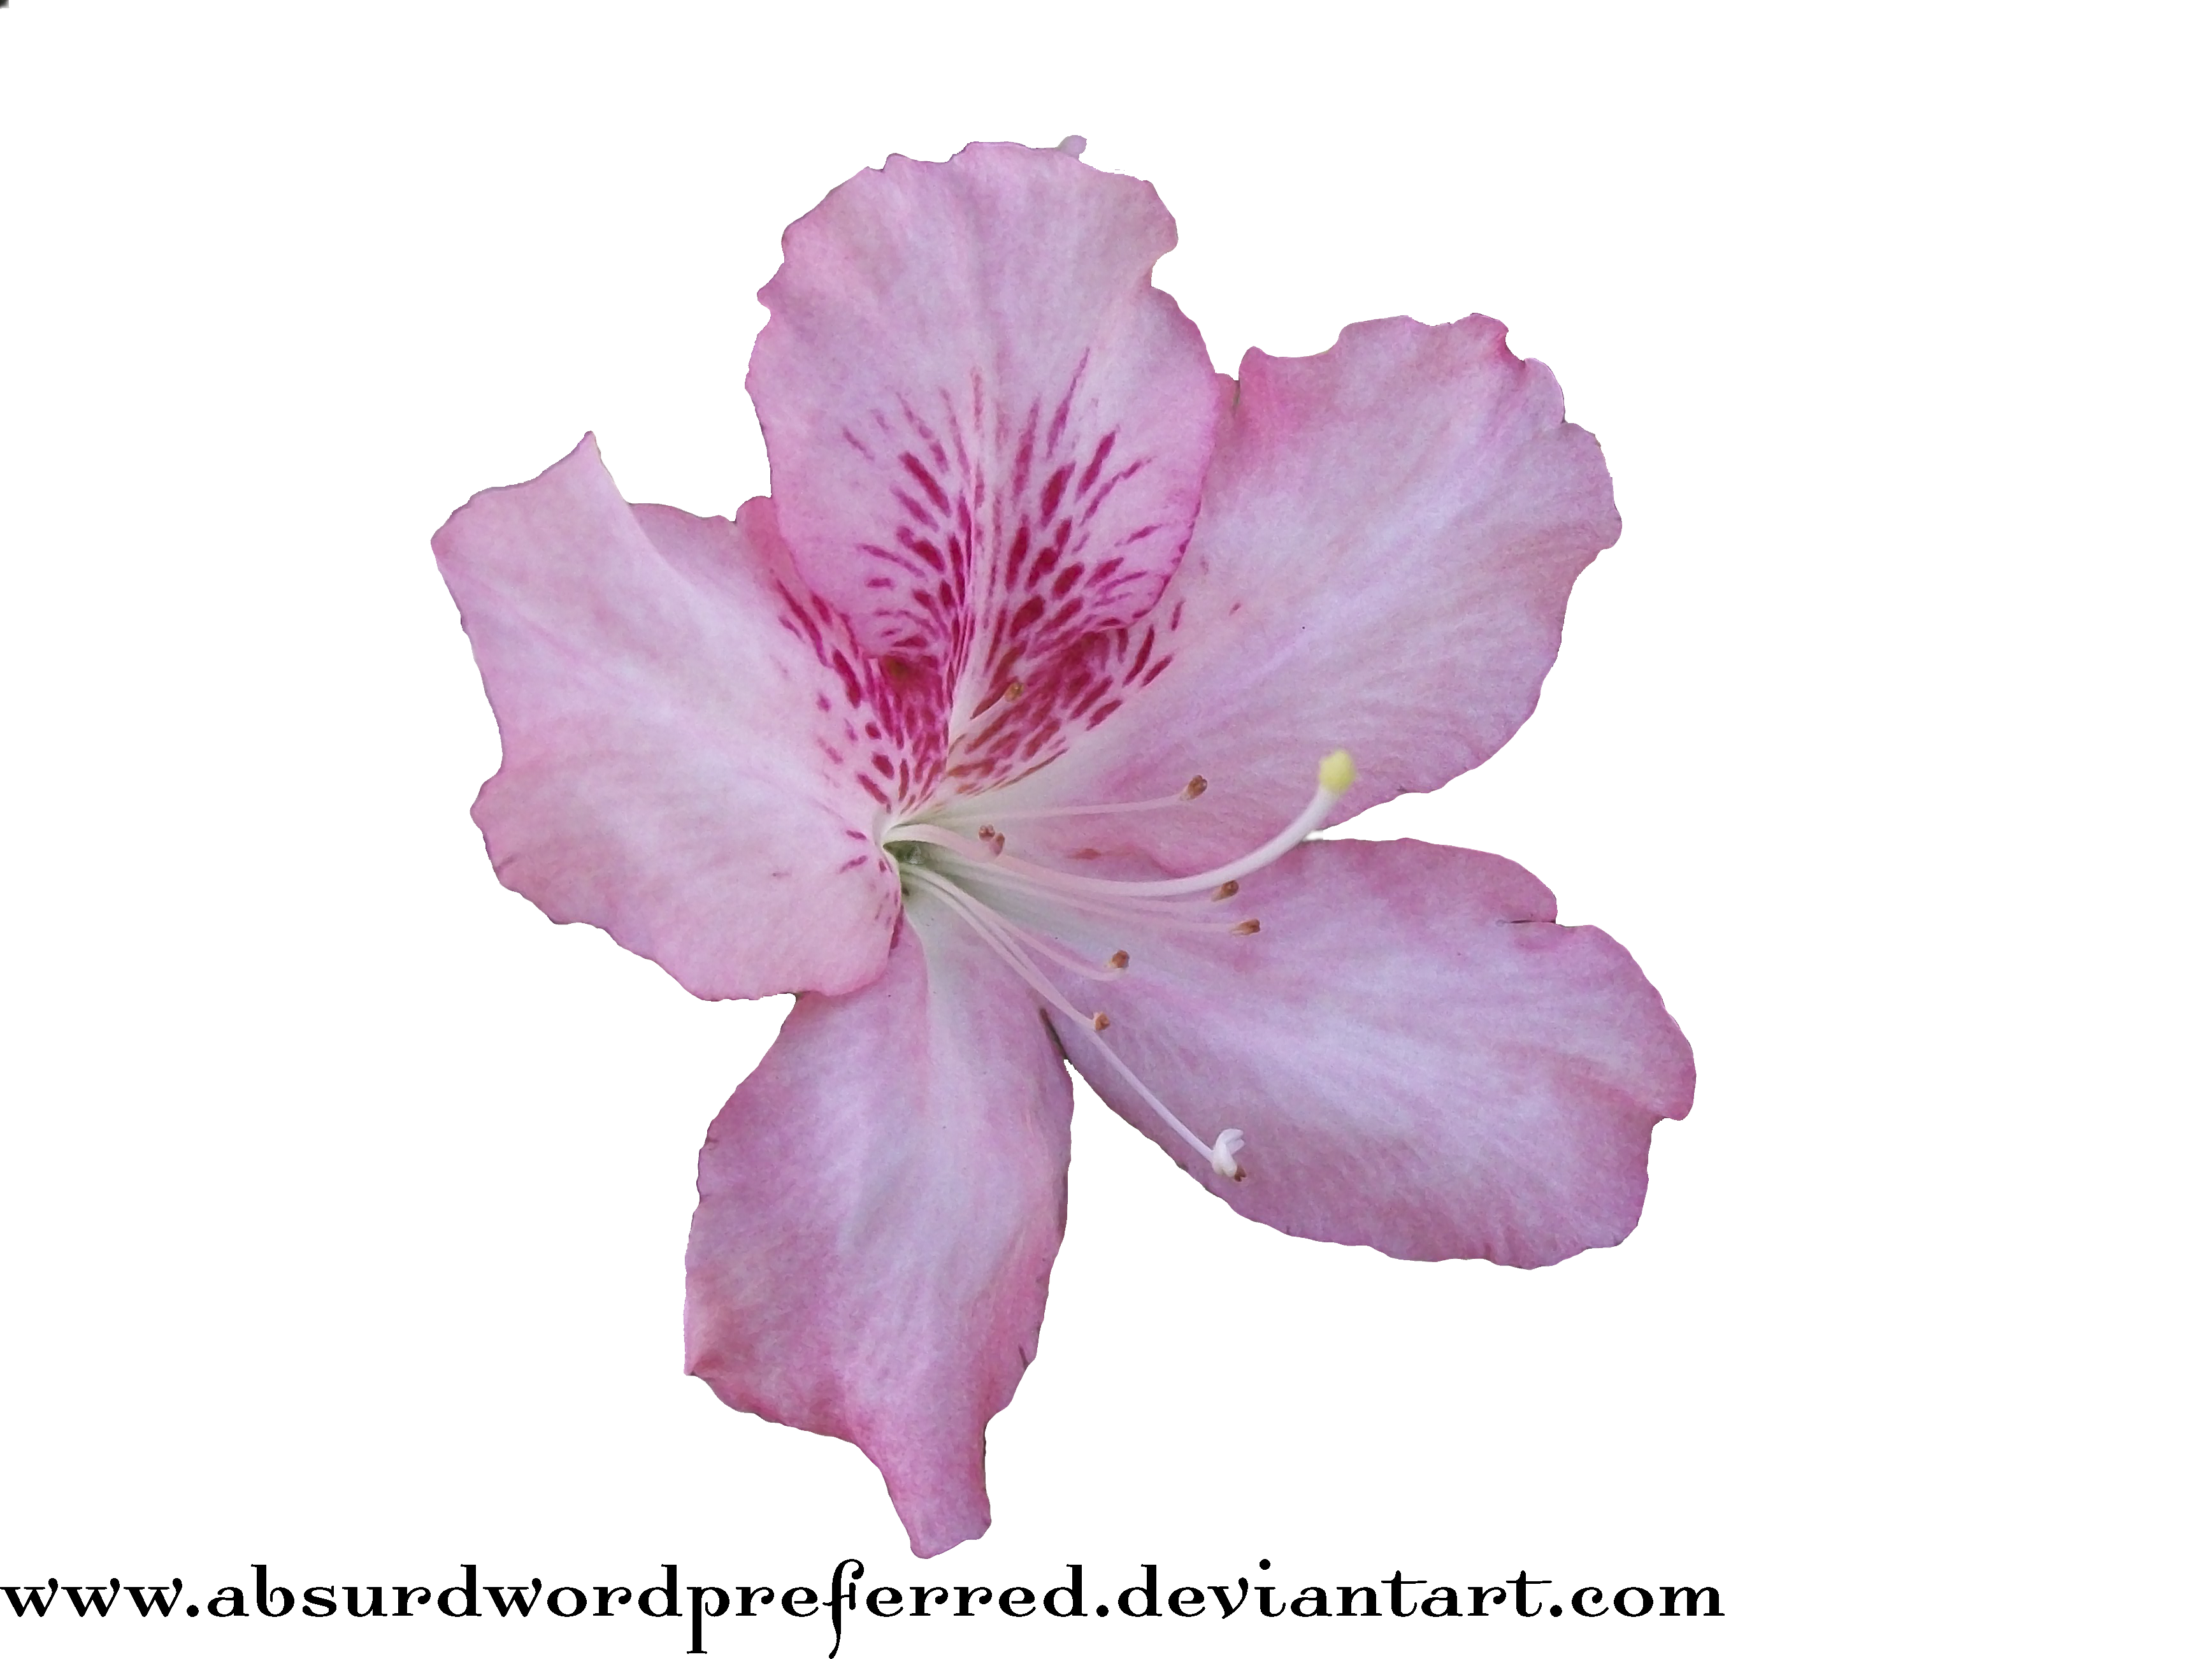 Transparent Flower PNG by AbsurdWordPreferred on DeviantArt